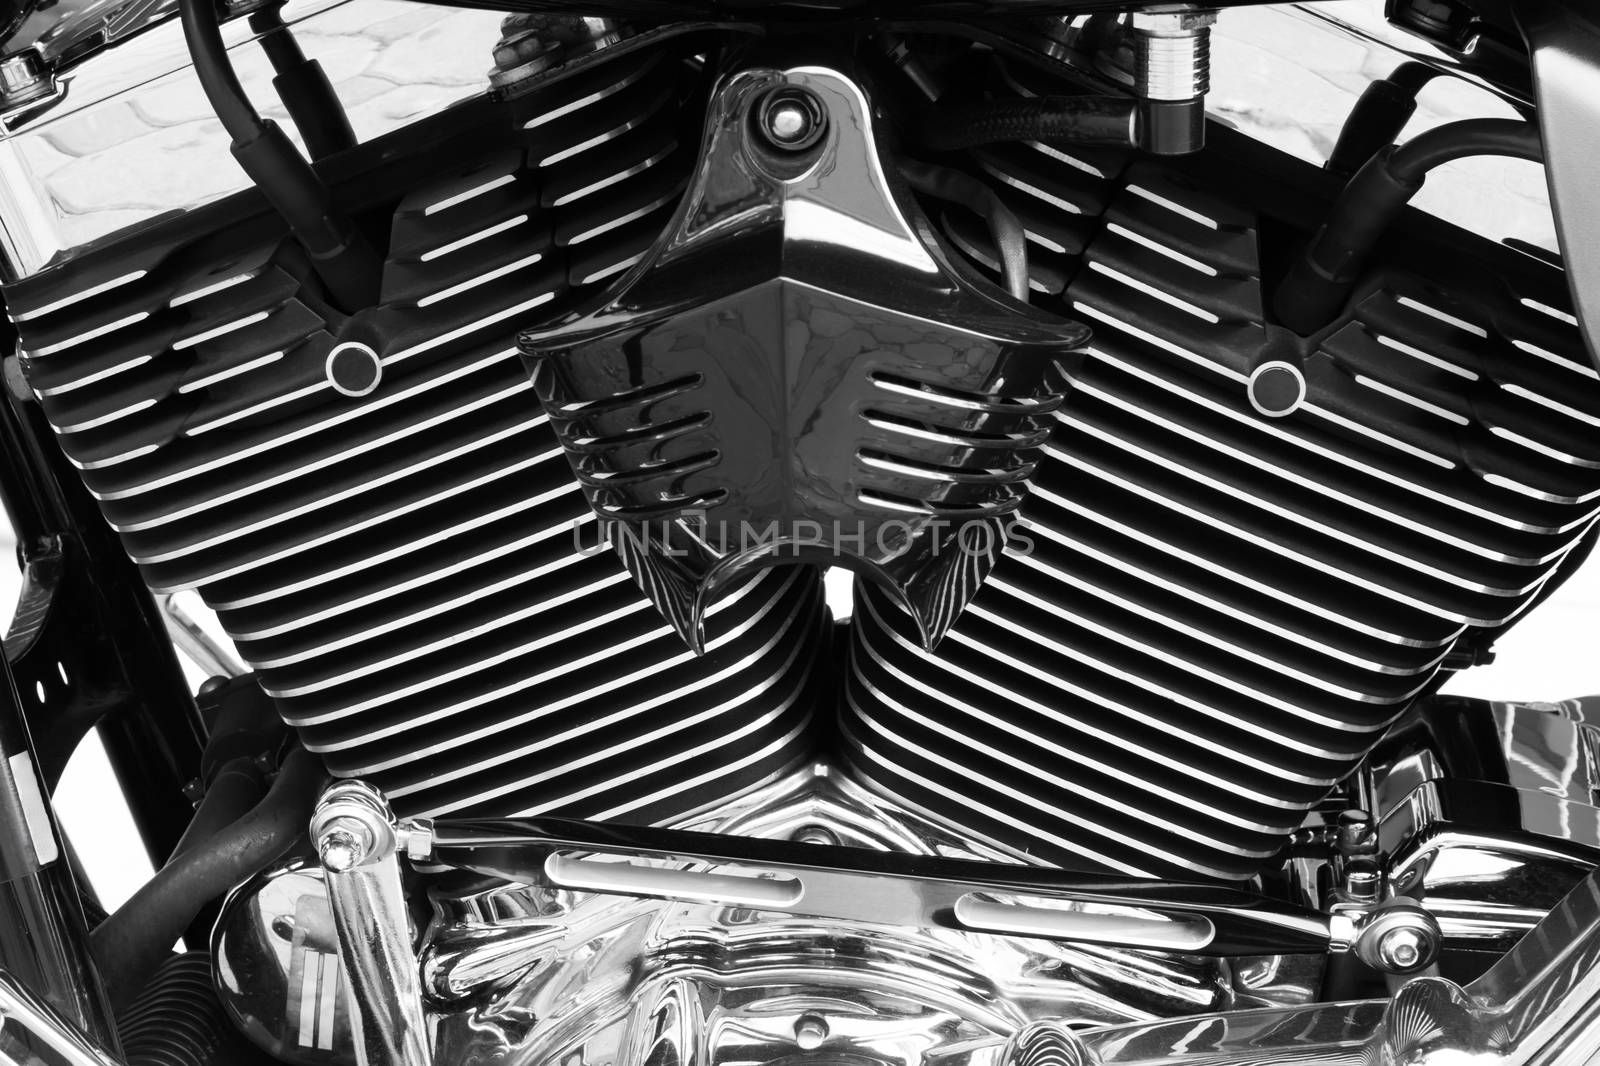 Motorbike's chromed engine black and white background by worrayuth